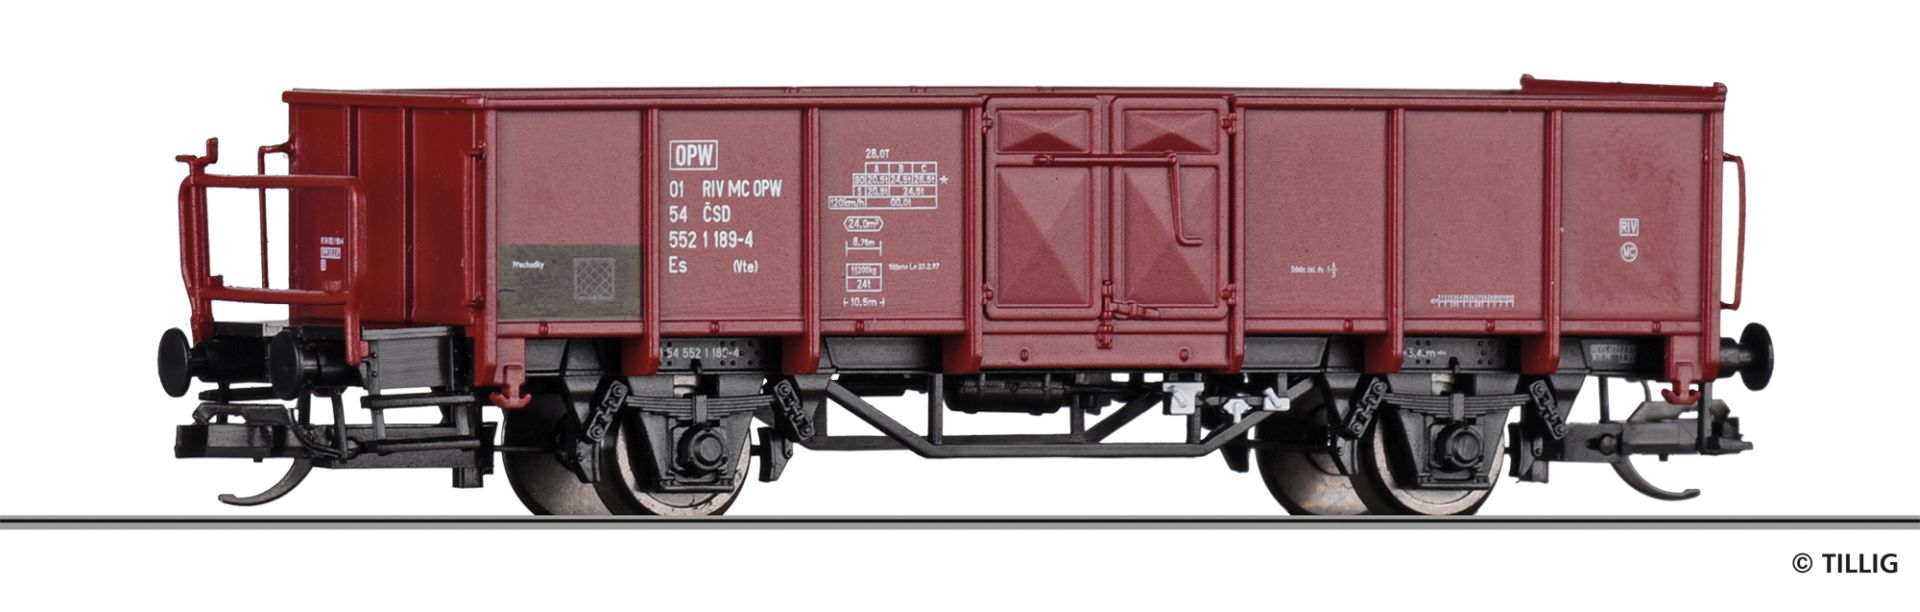 Tillig 14088 - Offener Güterwagen Vte, CSD, Ep.IV